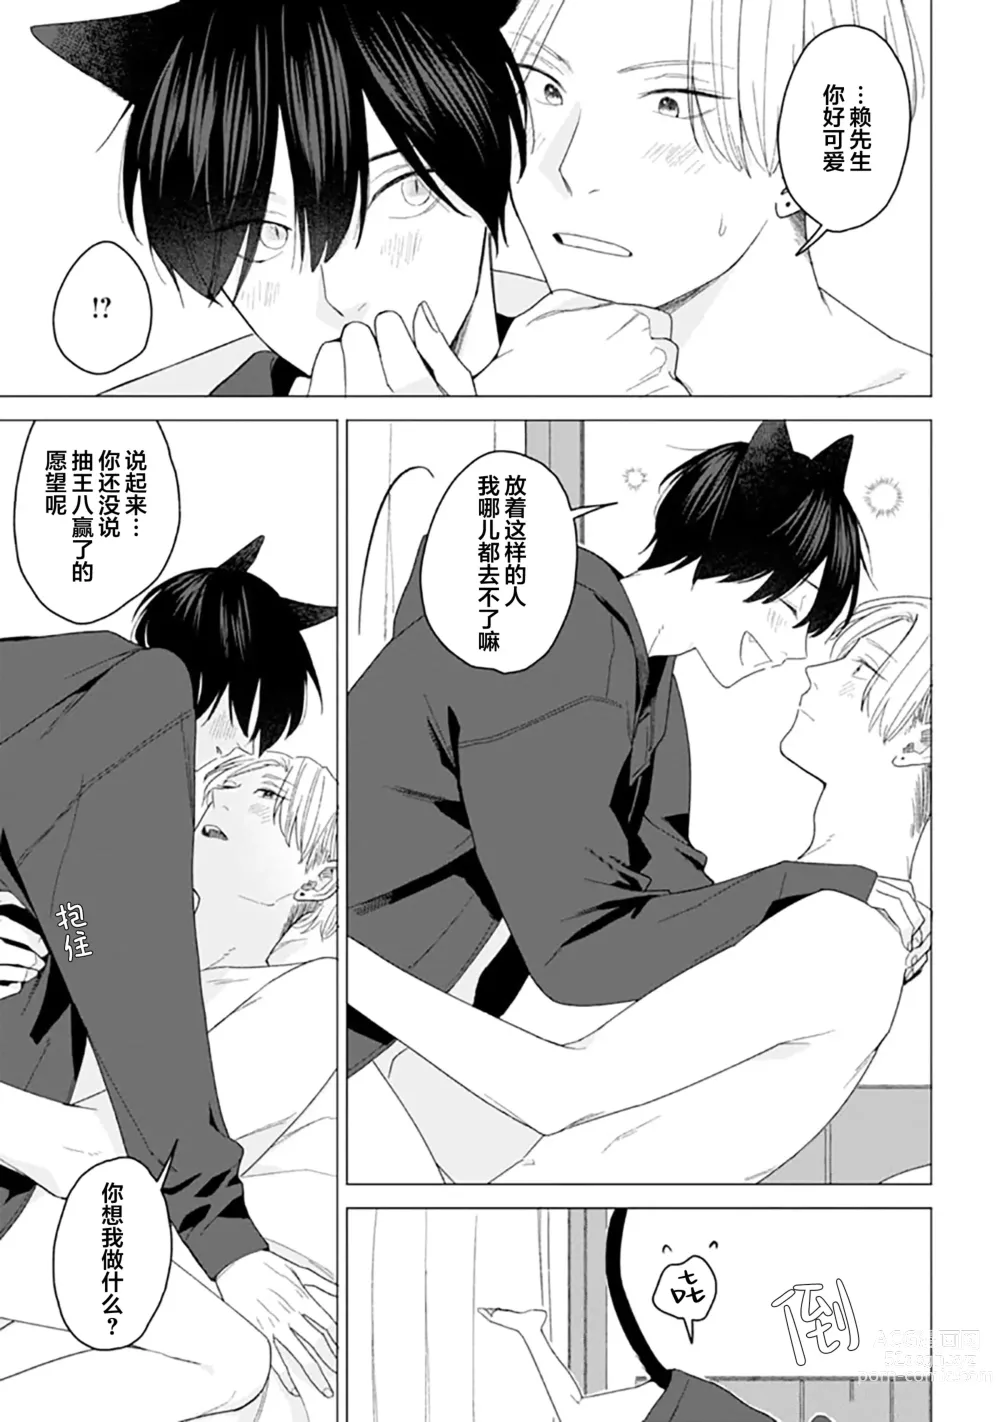 Page 178 of manga 恋爱中的猫咪想被抚摸